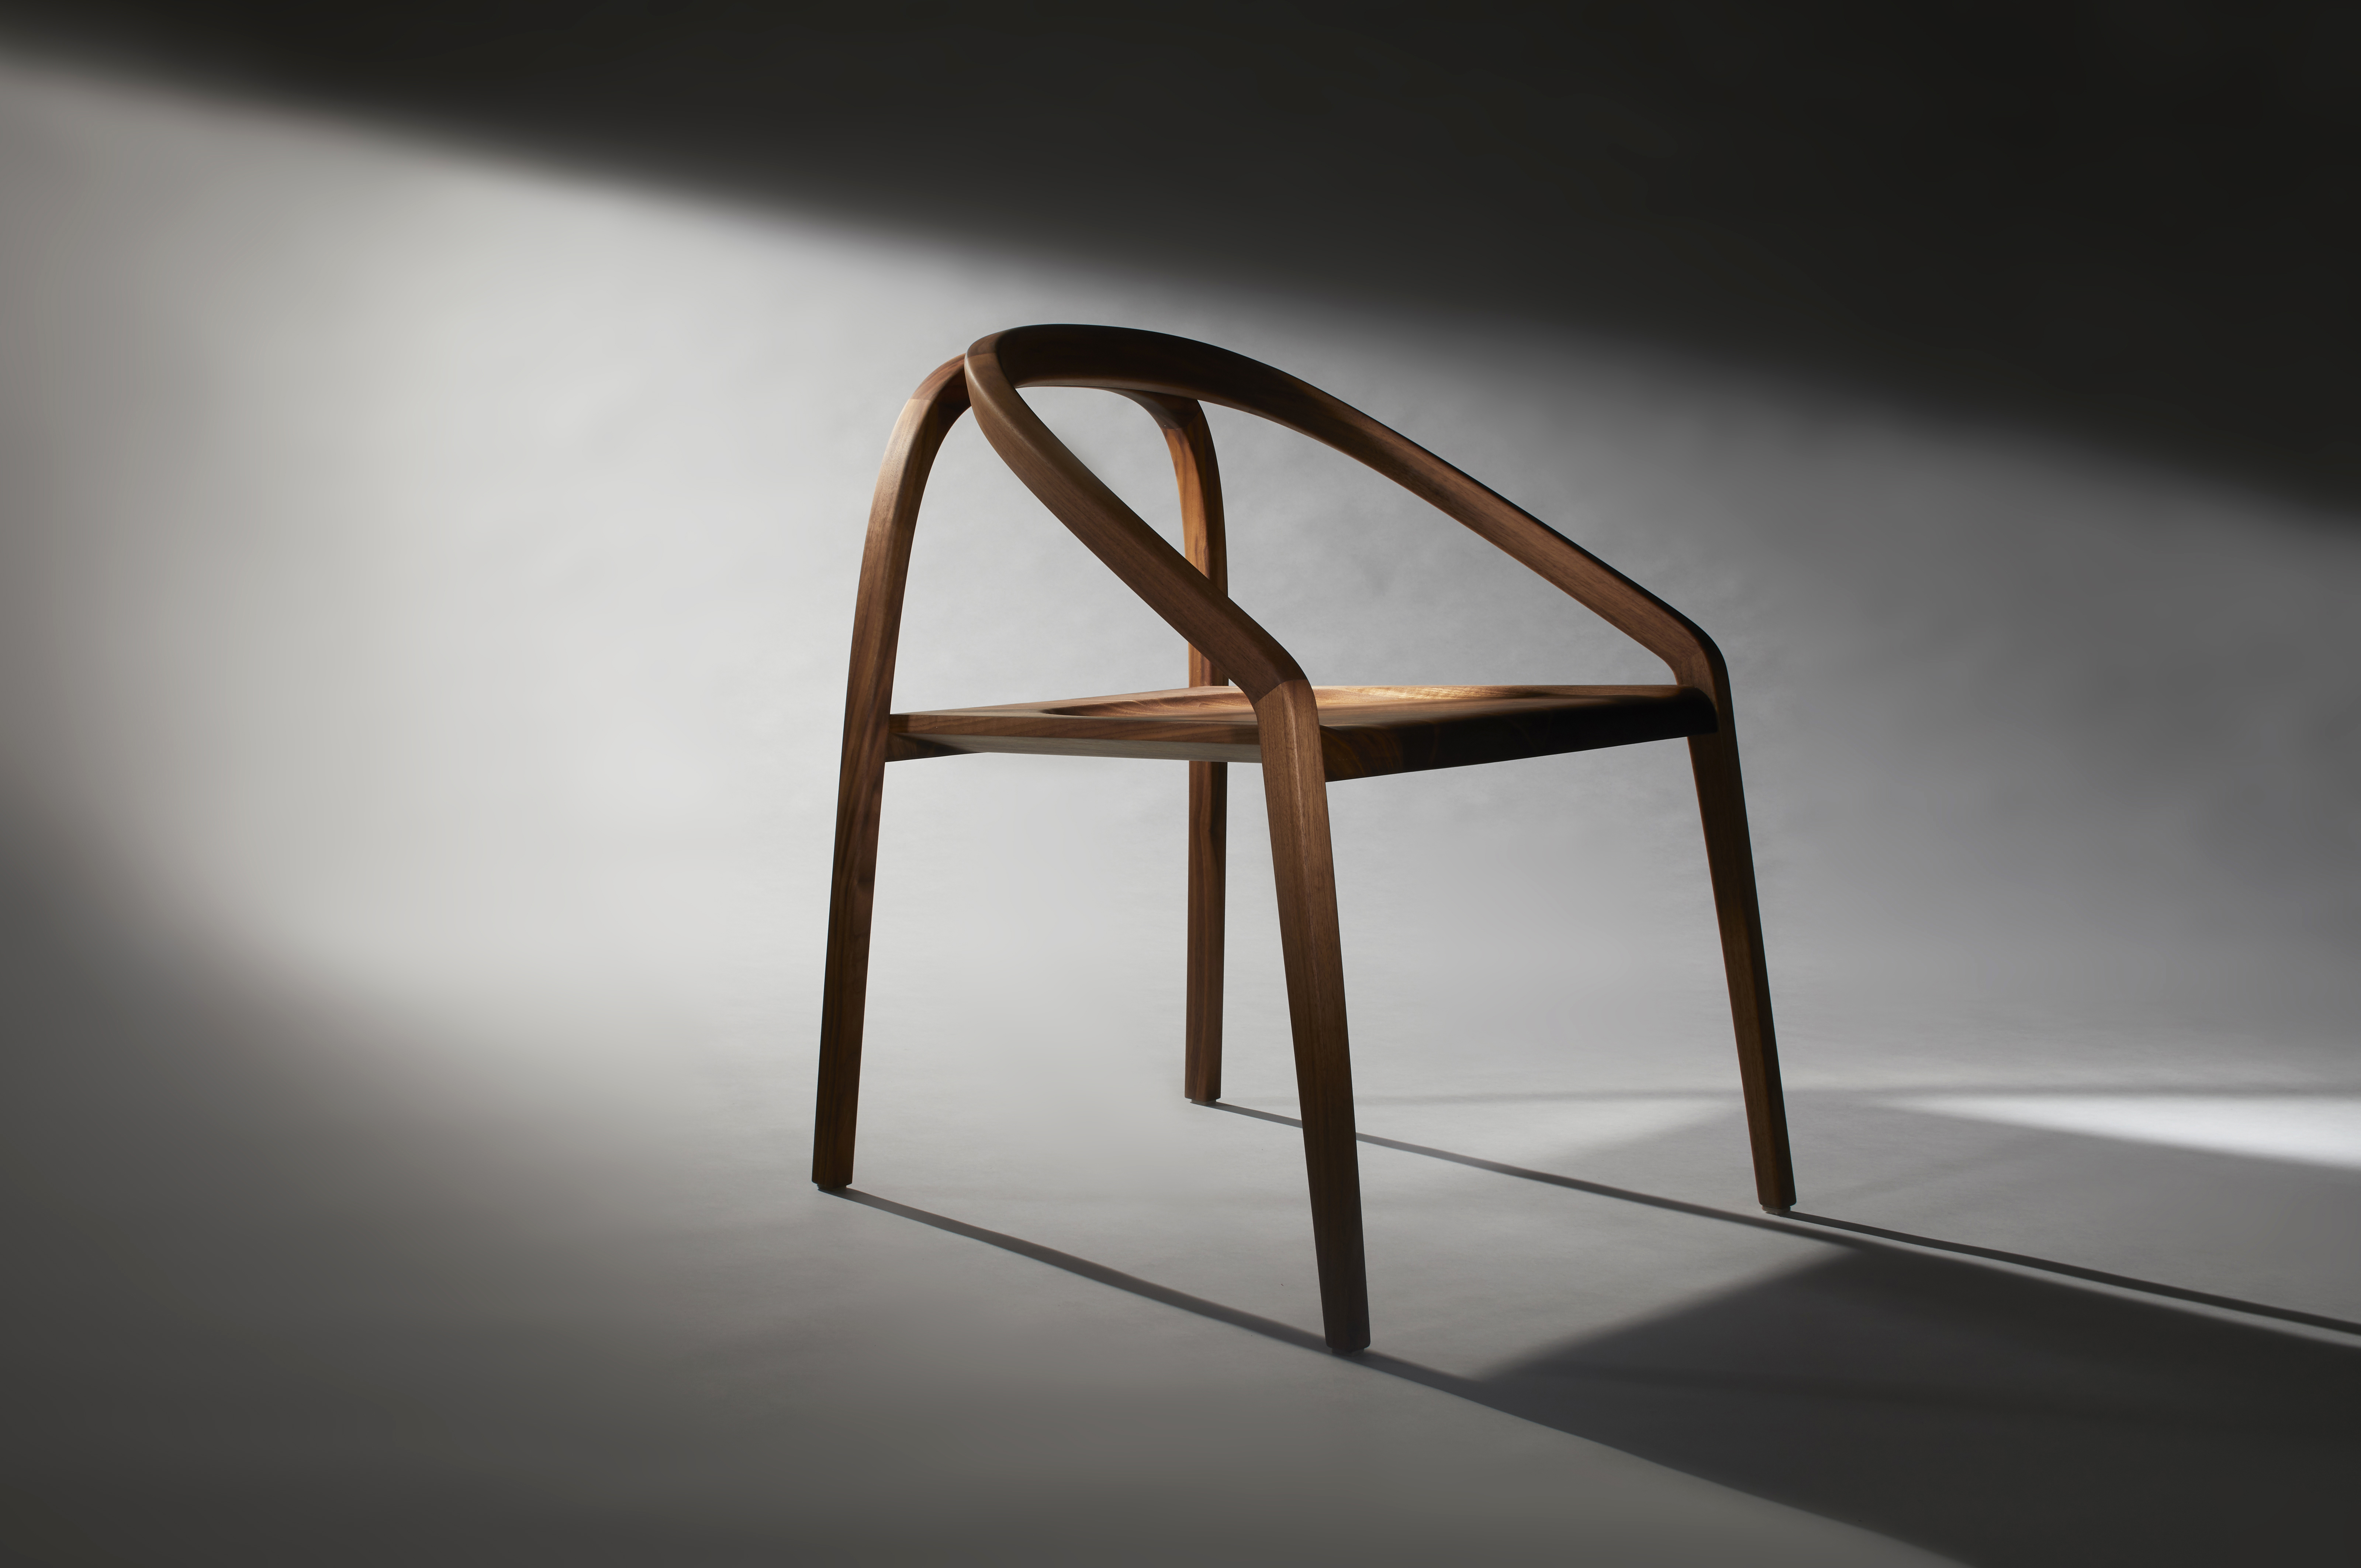 Photo of “Sensi” chair created by Sasipat Leelachart, Environmental Design student.